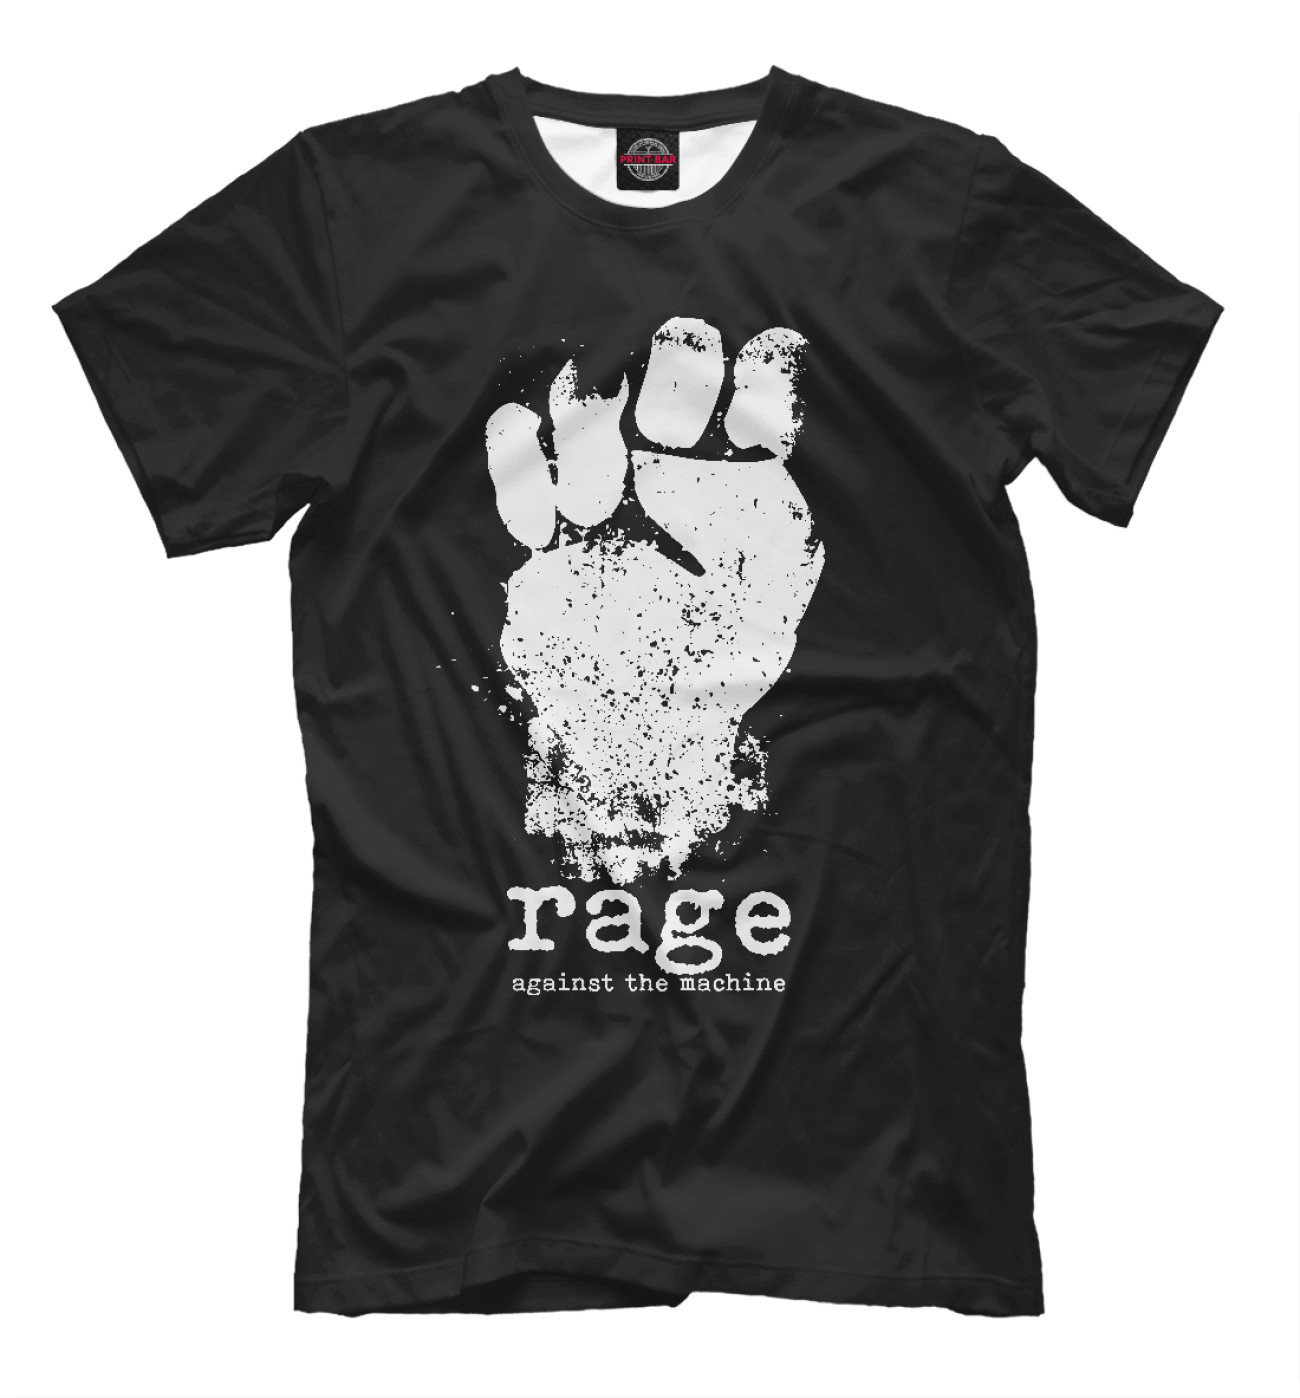 Мужская Футболка Rage Against the Machine, артикул: RAM-245512-fut-2